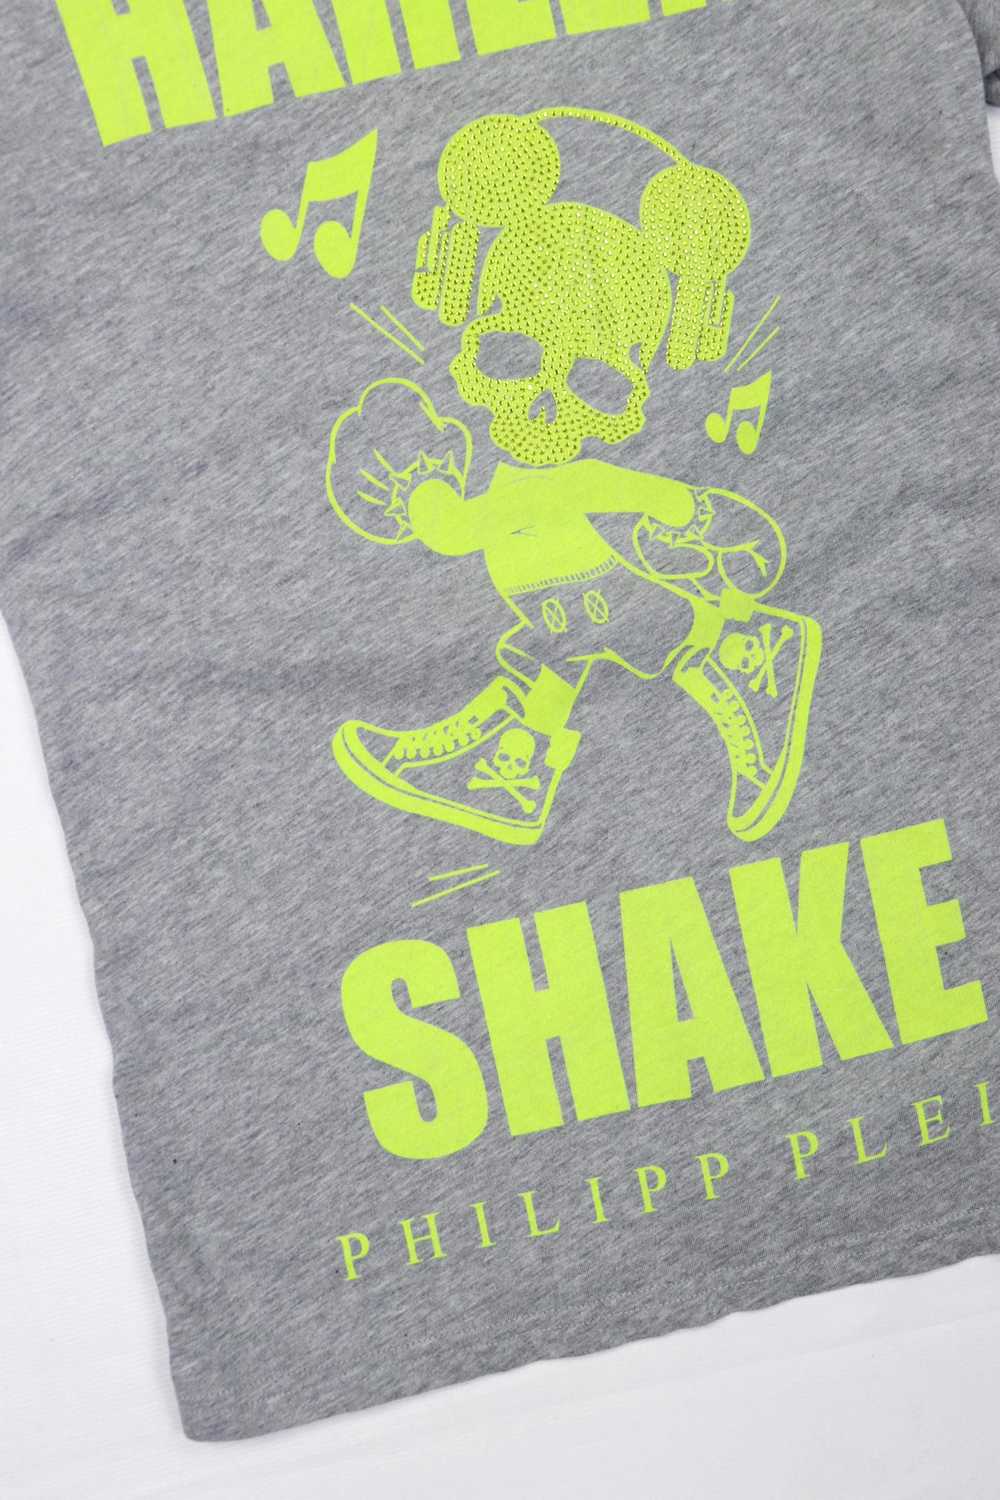 Philipp Plein Philipp Plein HOMME Harlem Shake Gr… - image 4